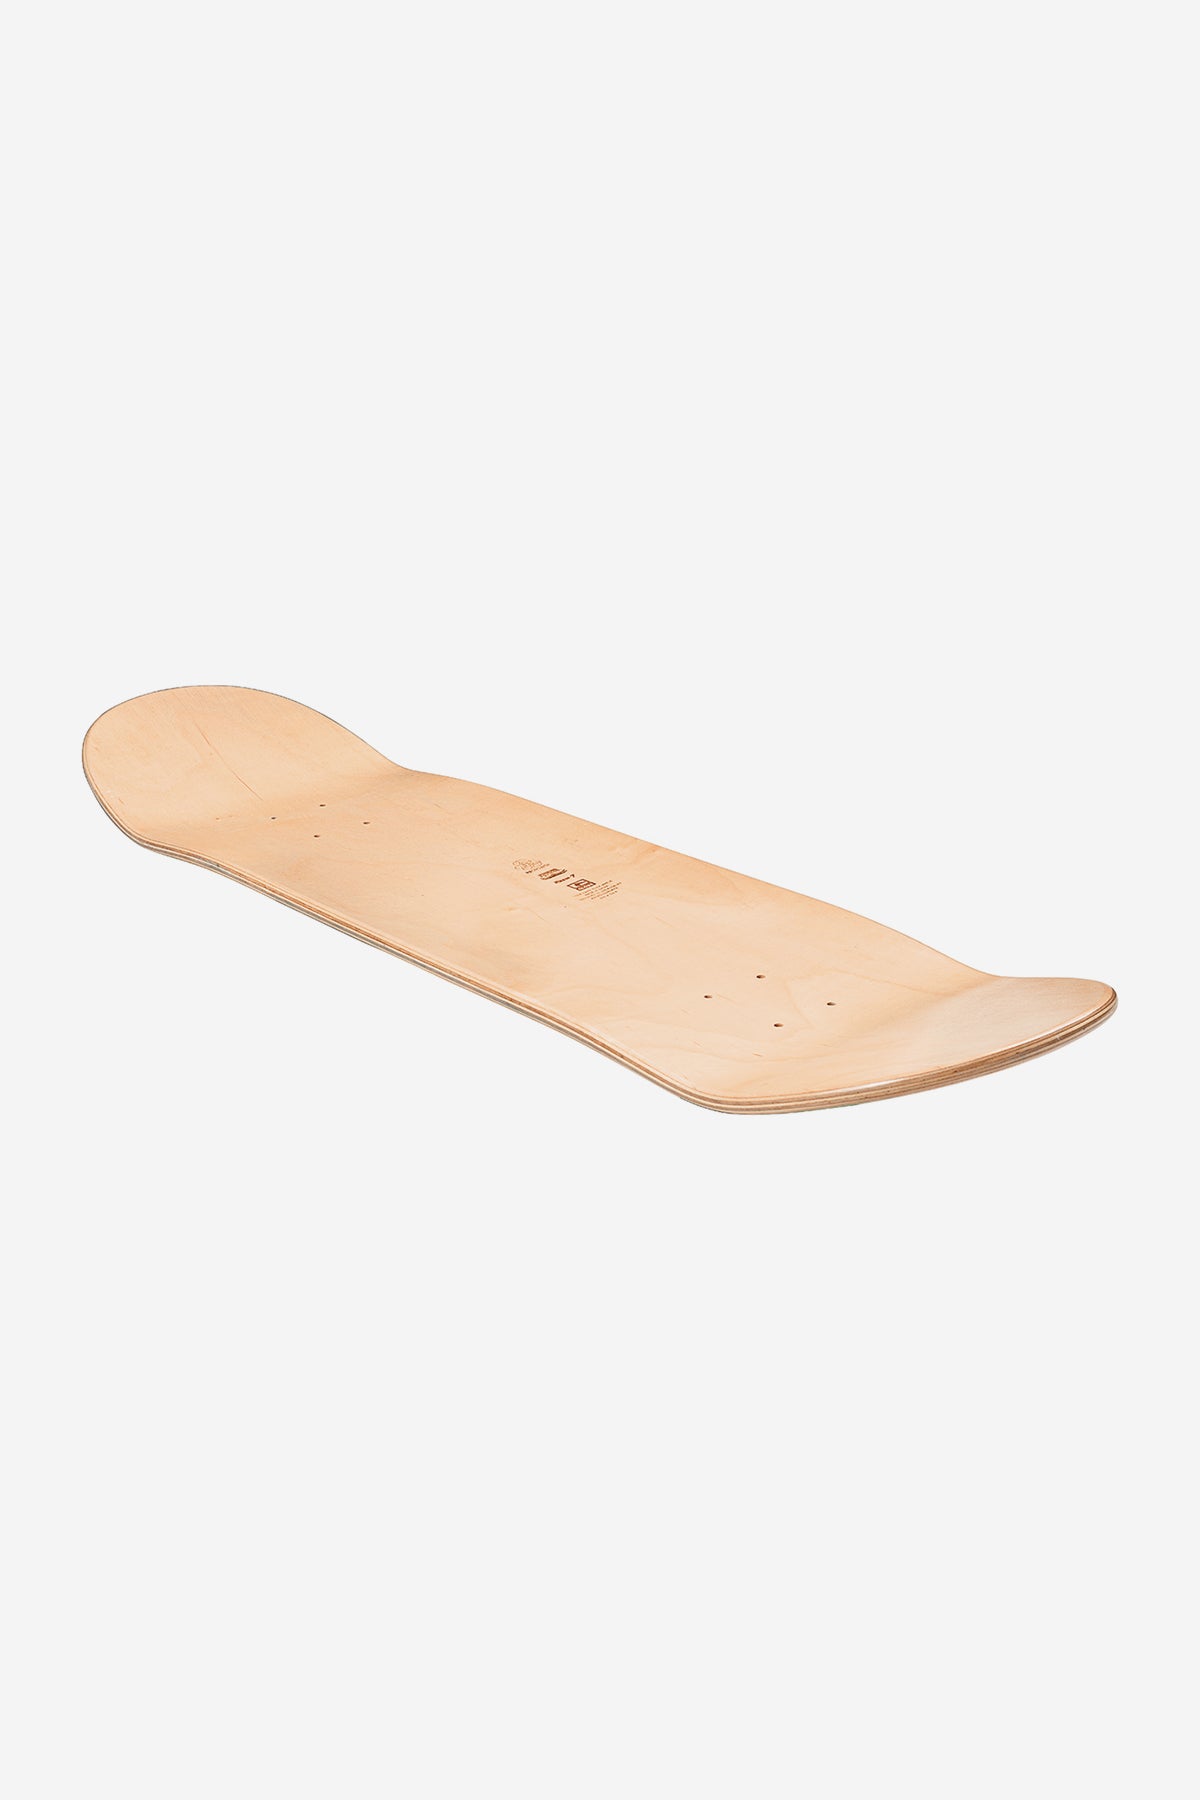 Globe - Goodstock - Red - 7,75" Skateboard Deck